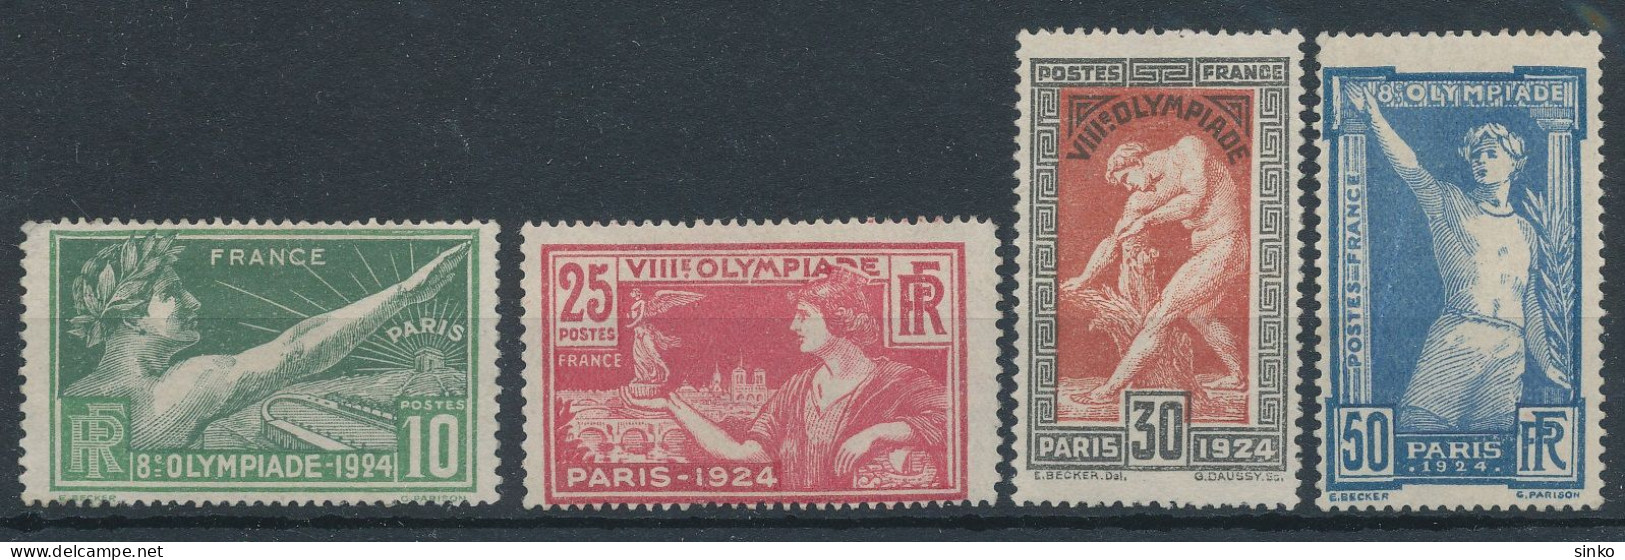 1924. France - Olympics - Estate 1924: Paris